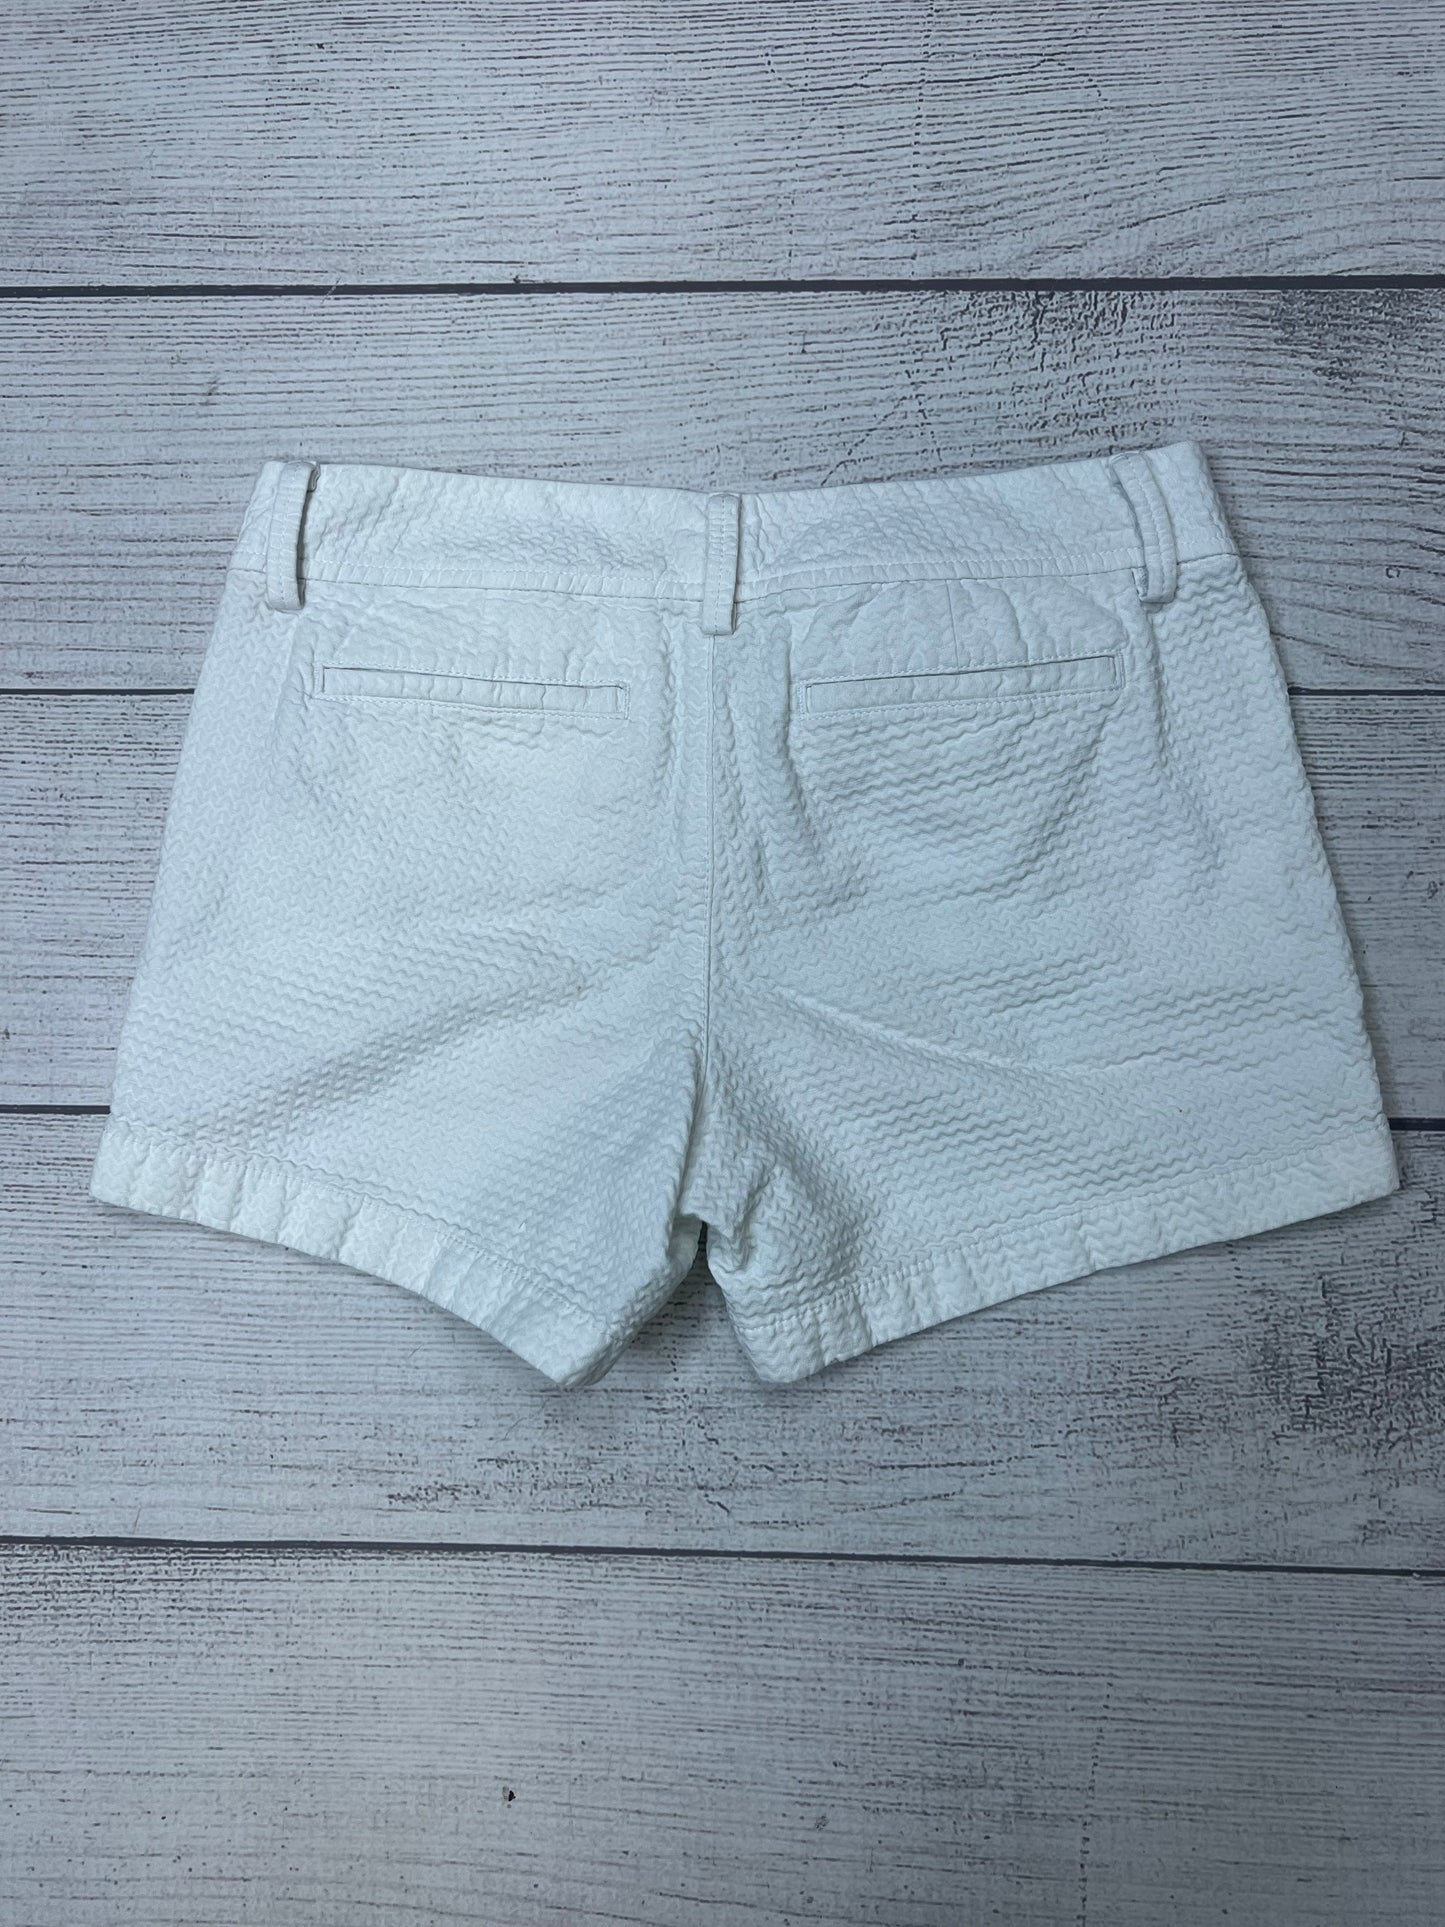 White Shorts Lilly Pulitzer, Size 6